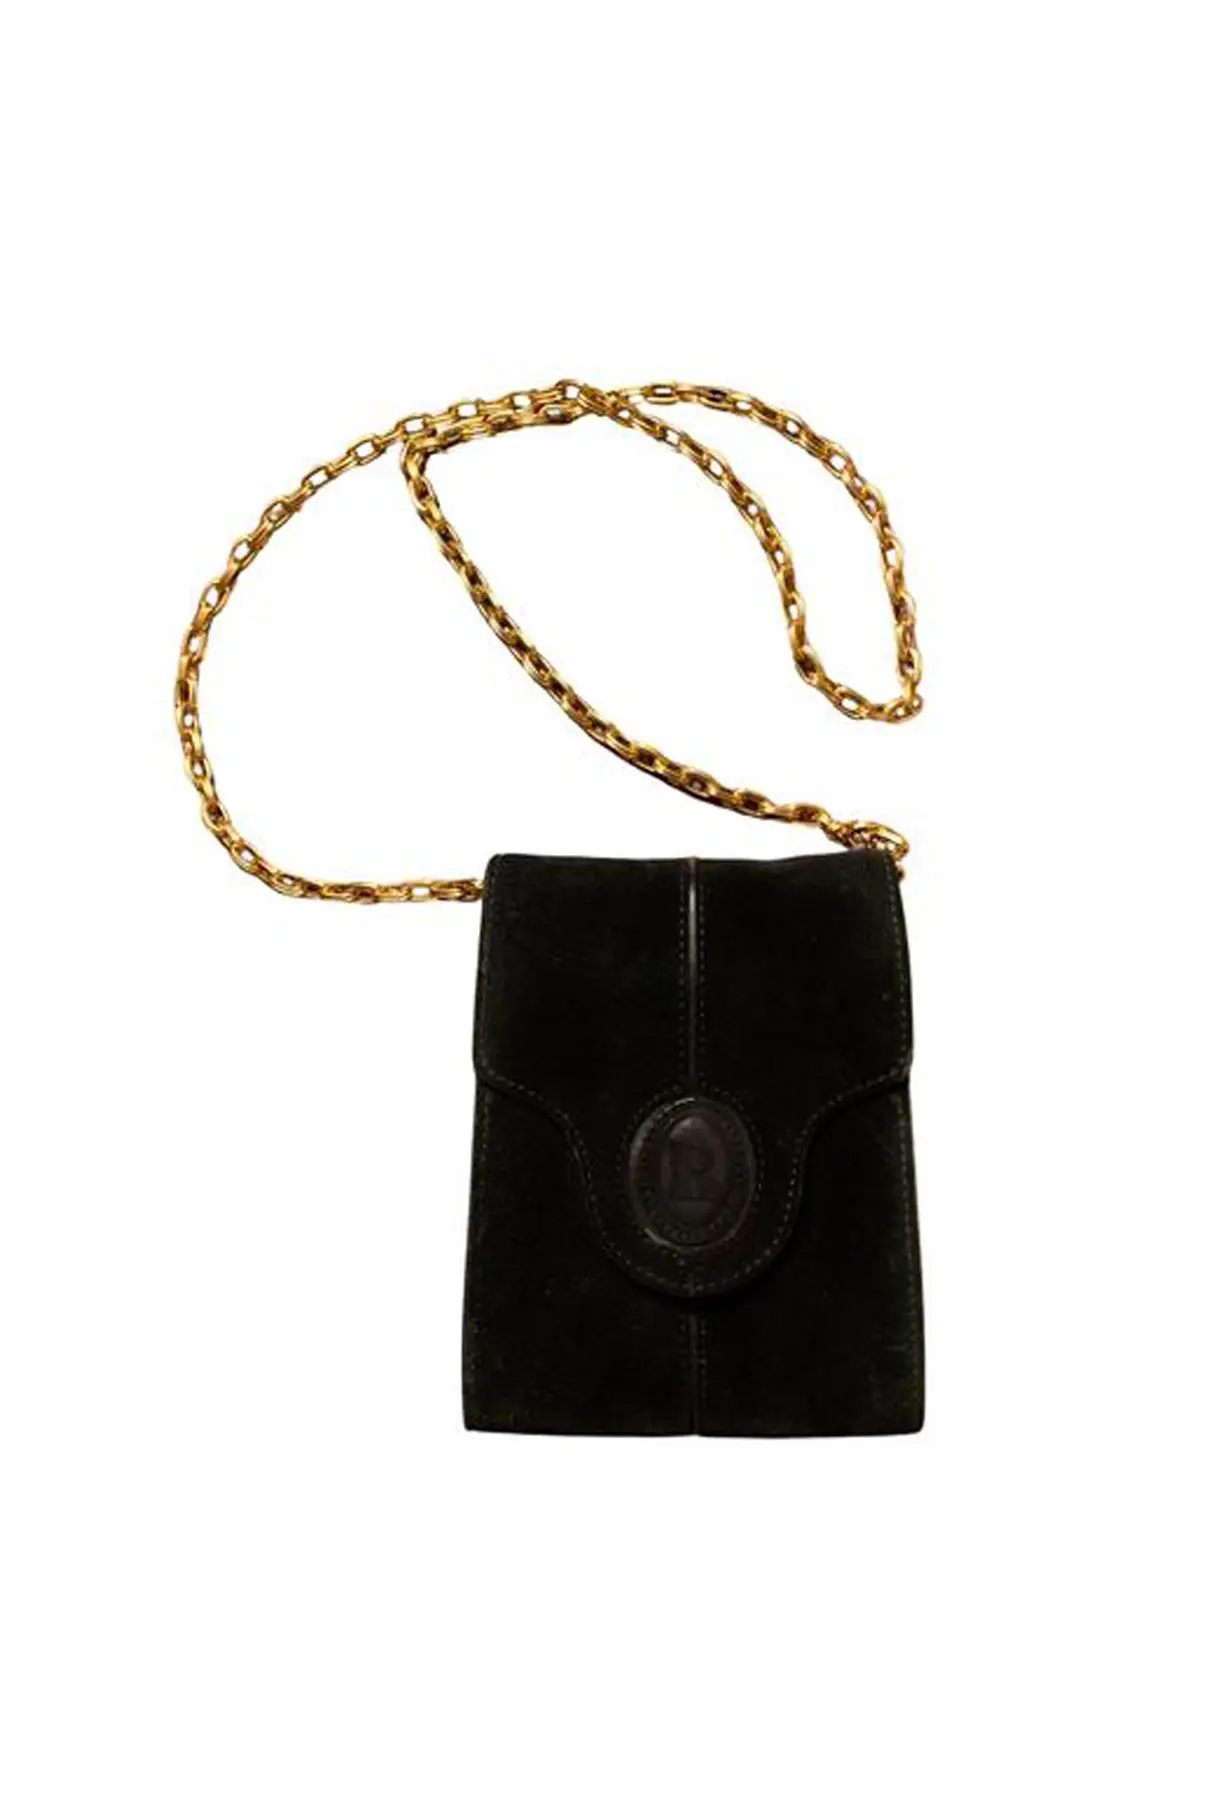 rouje-black-handbag-gold-chain.jpg